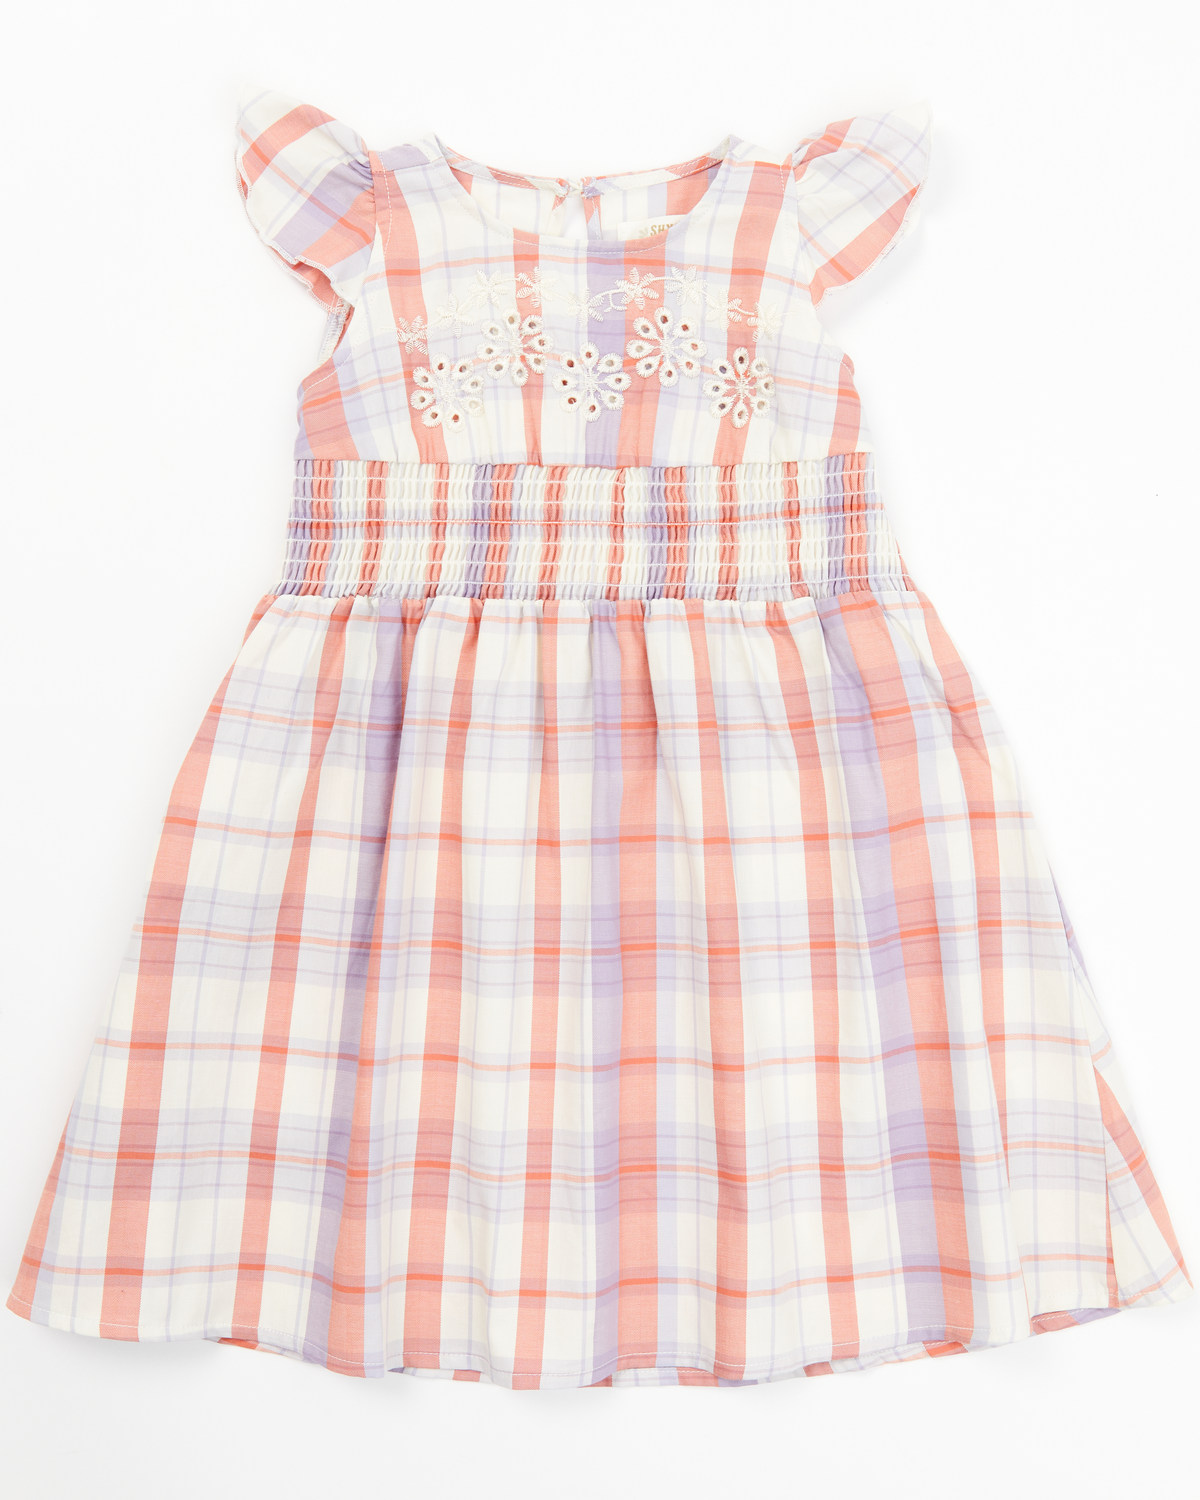 Shyanne Toddler Girls' Plaid Print Ruffle Dress